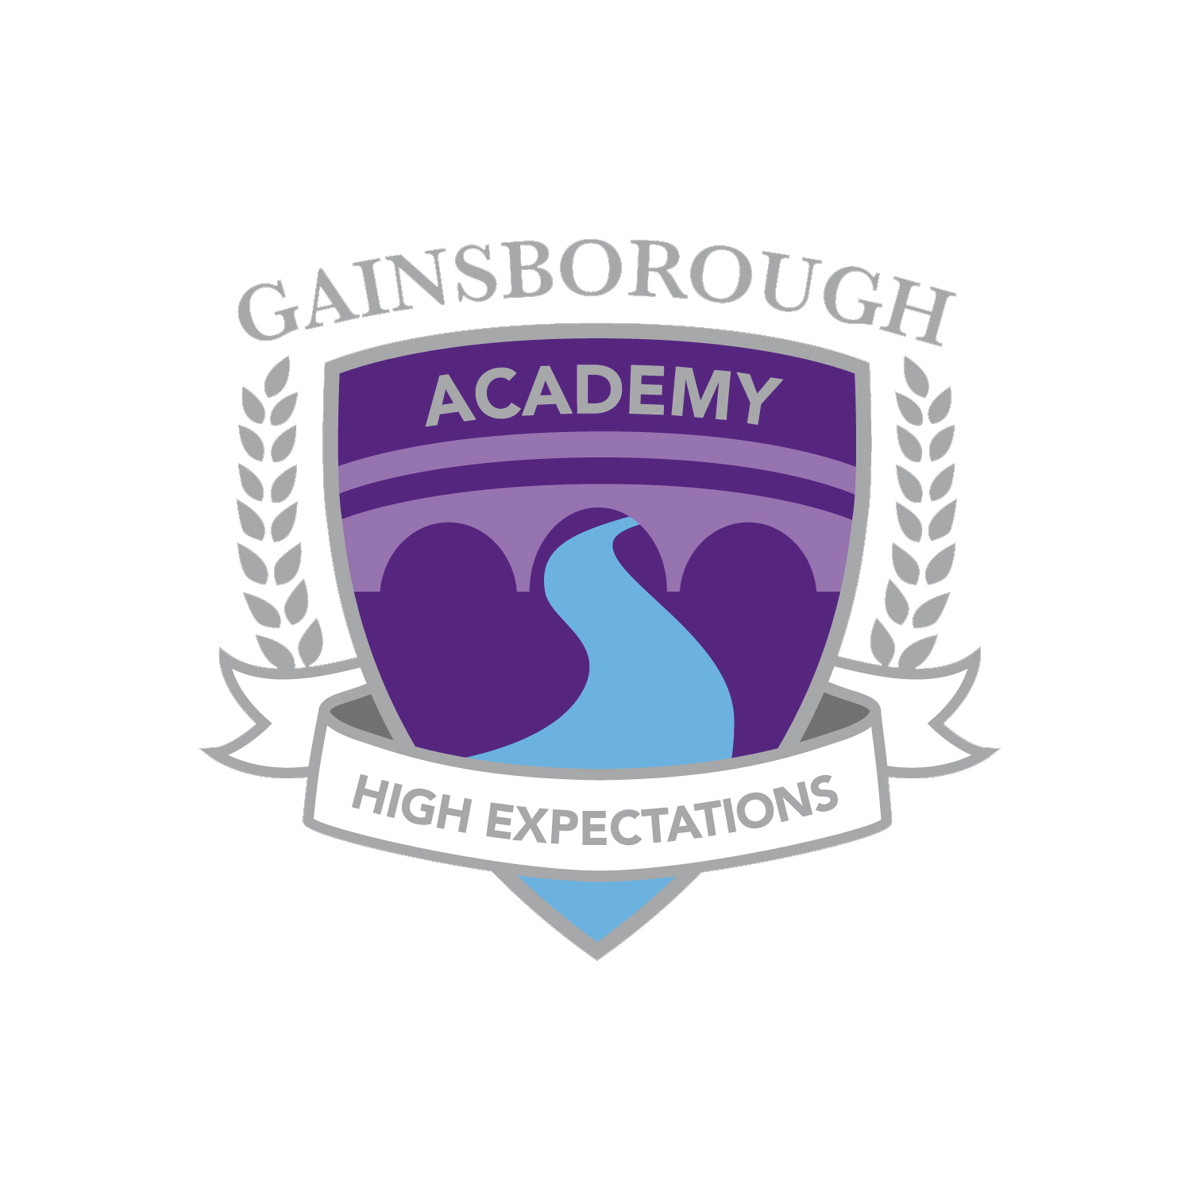 The Gainsborough Academy